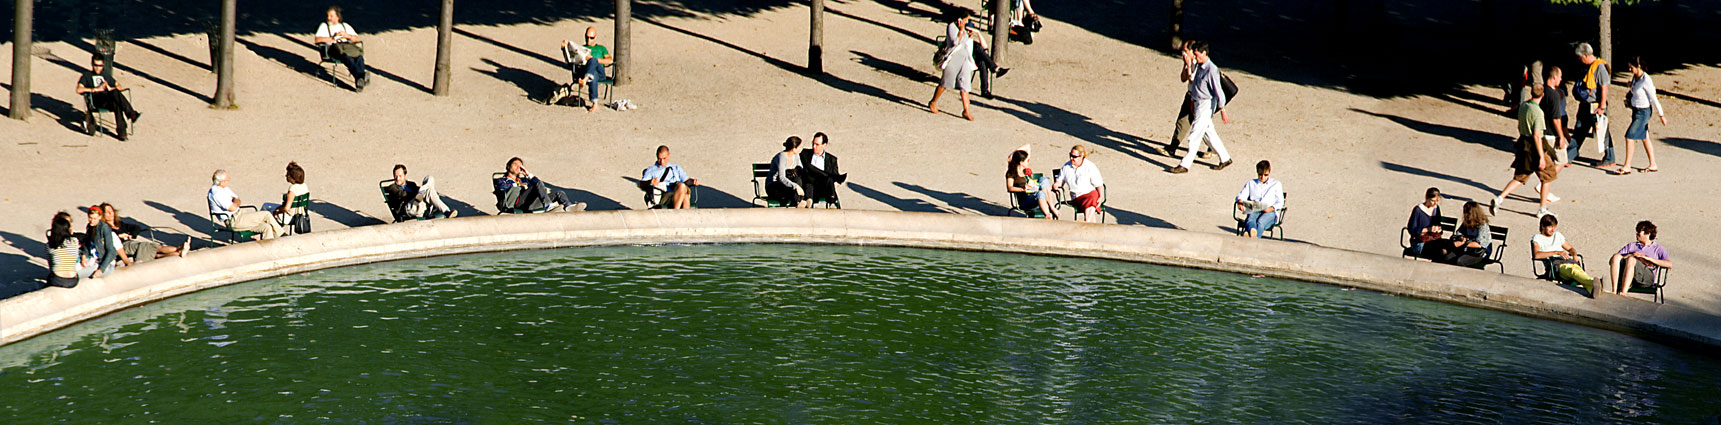 Palais Royal Pond, Paris, 2007